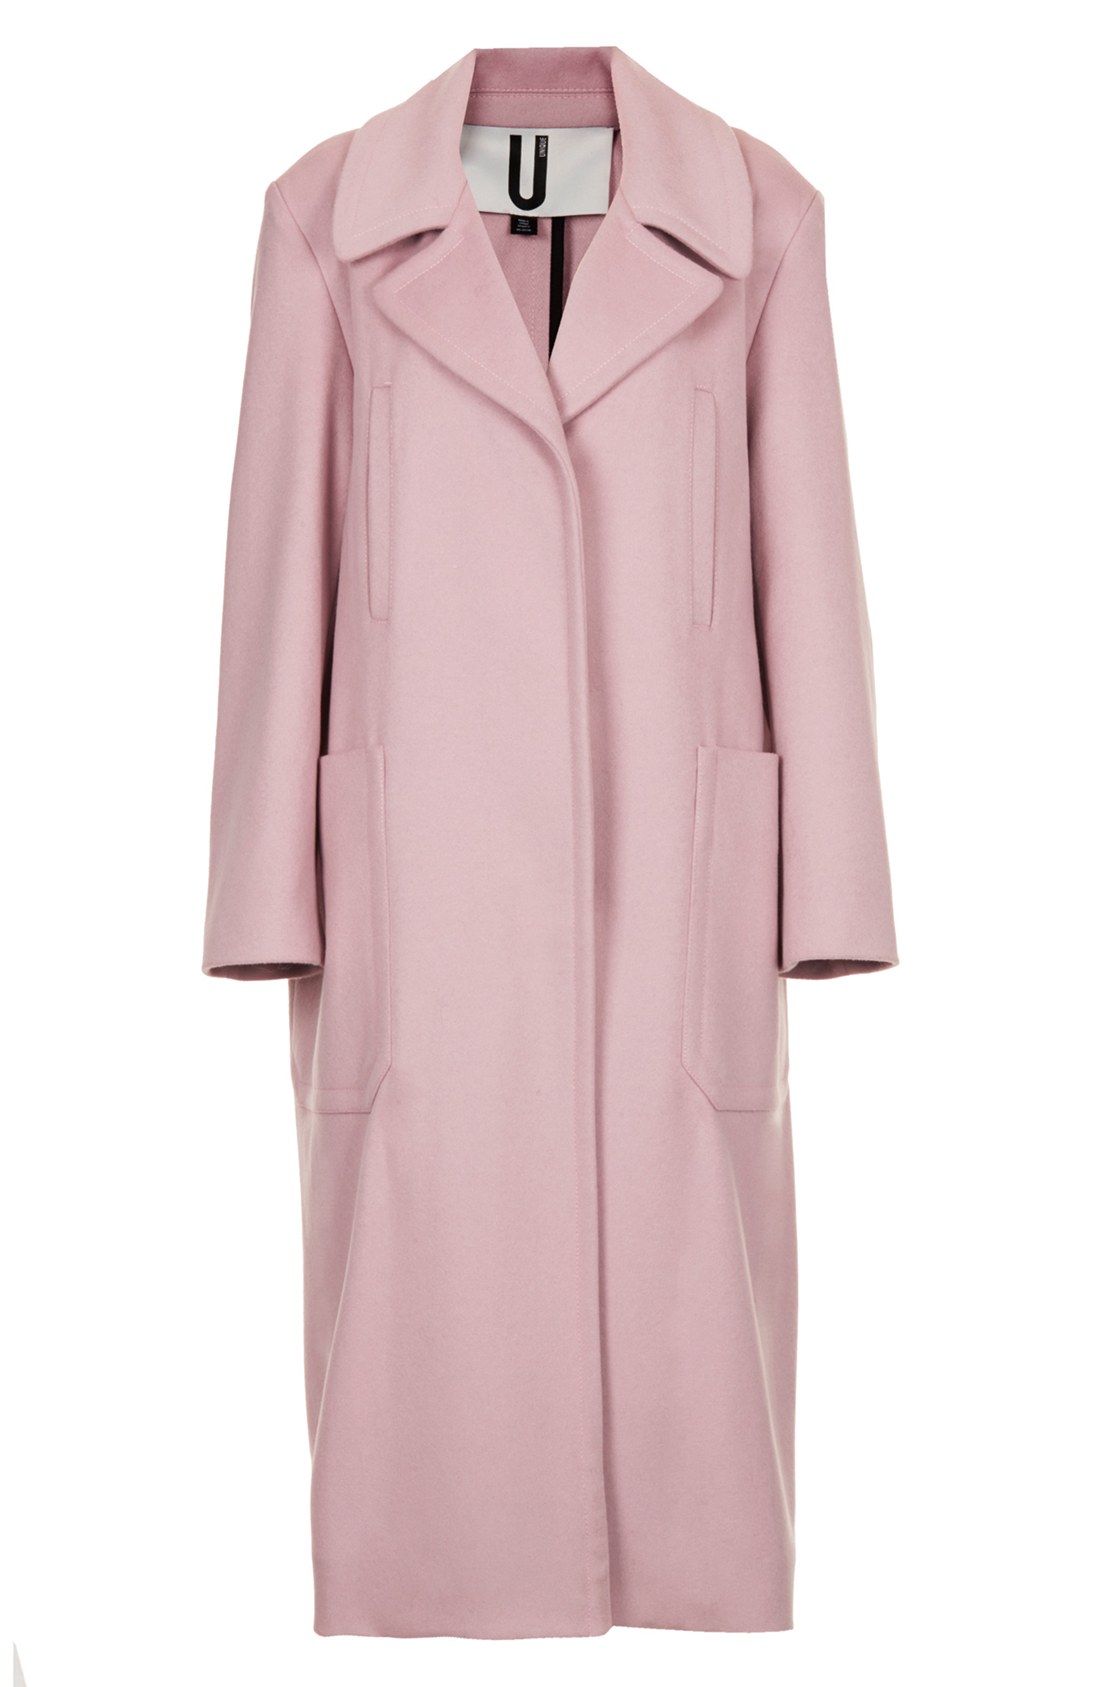 Topshop Unique Long Wool Blend Coat in Pink | Lyst